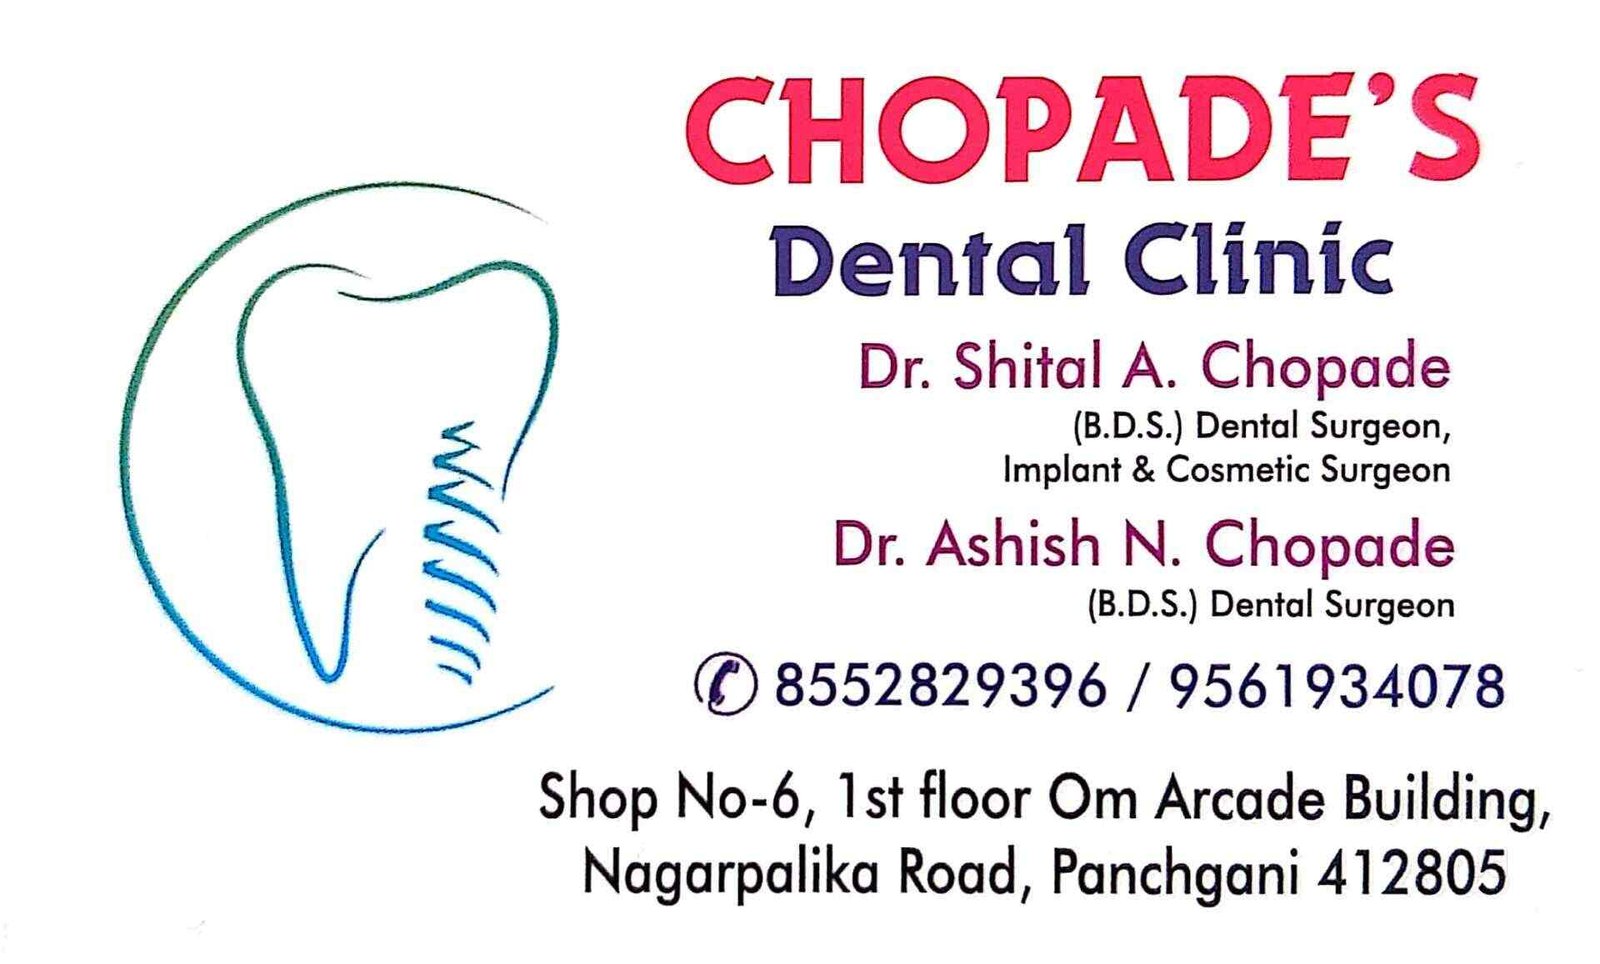 Chopade's Dental Clinic